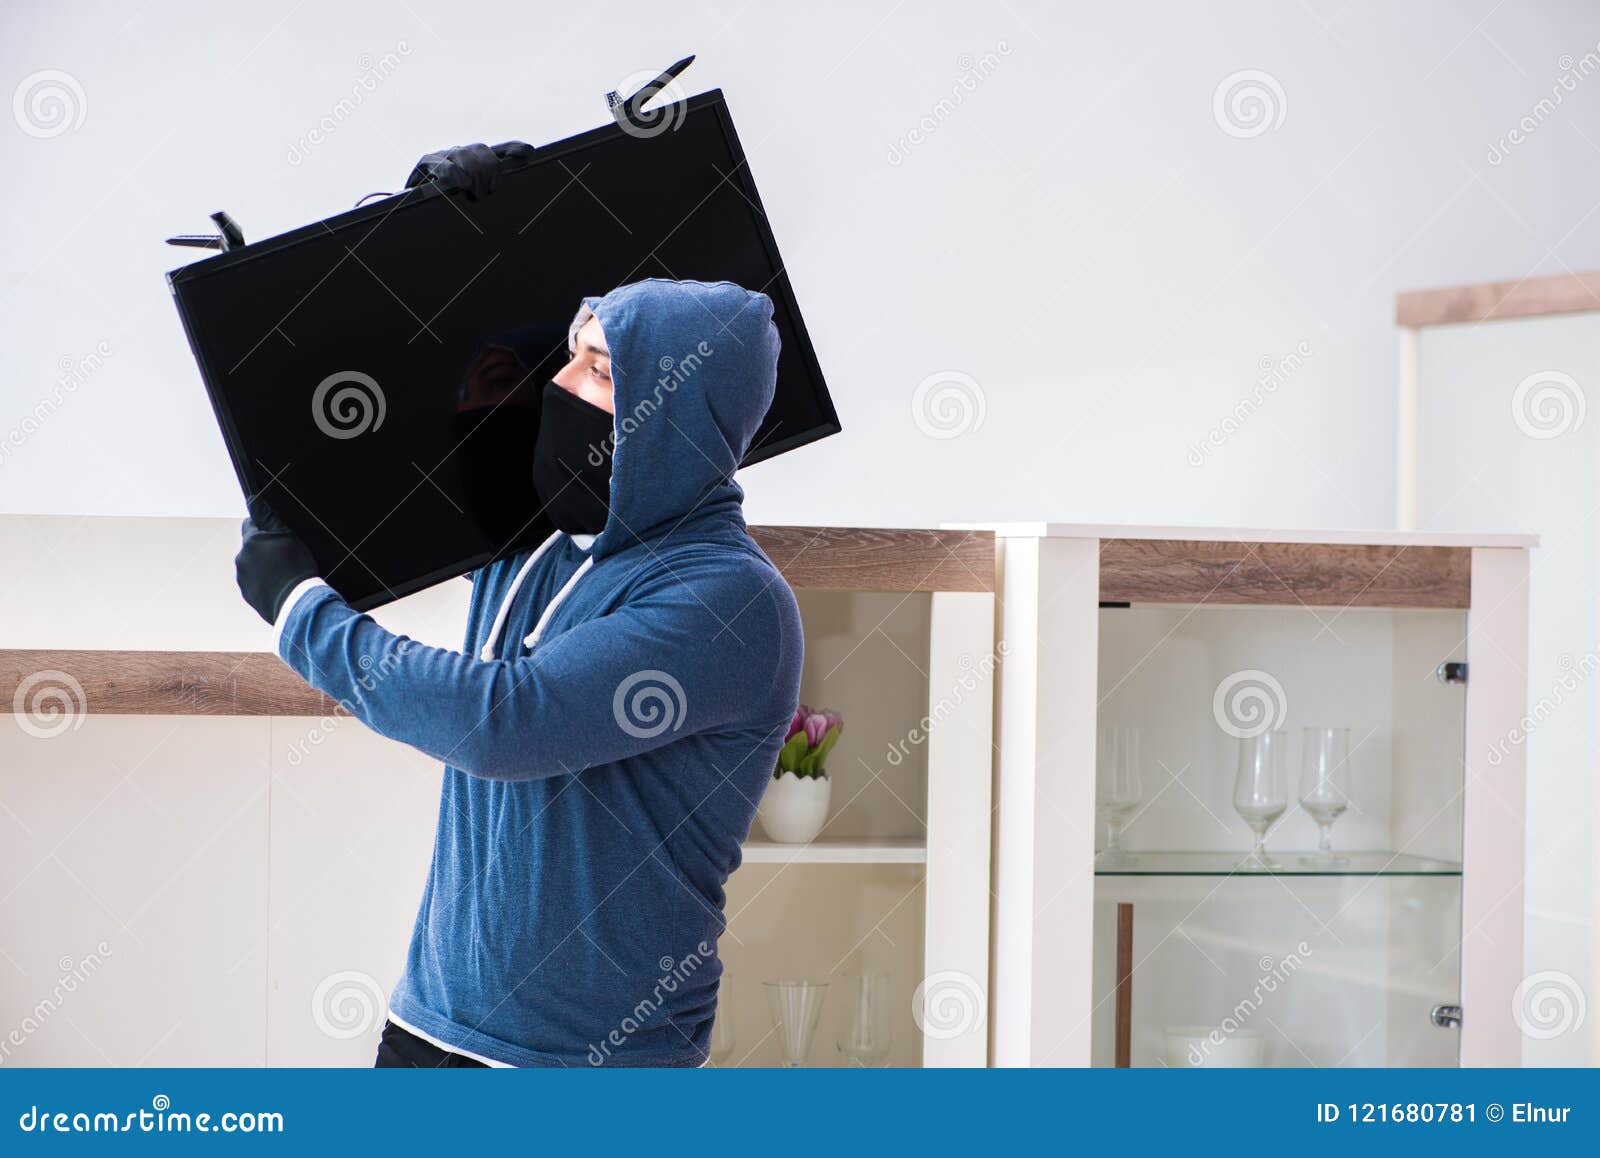 the man burglar stealing tv set from house